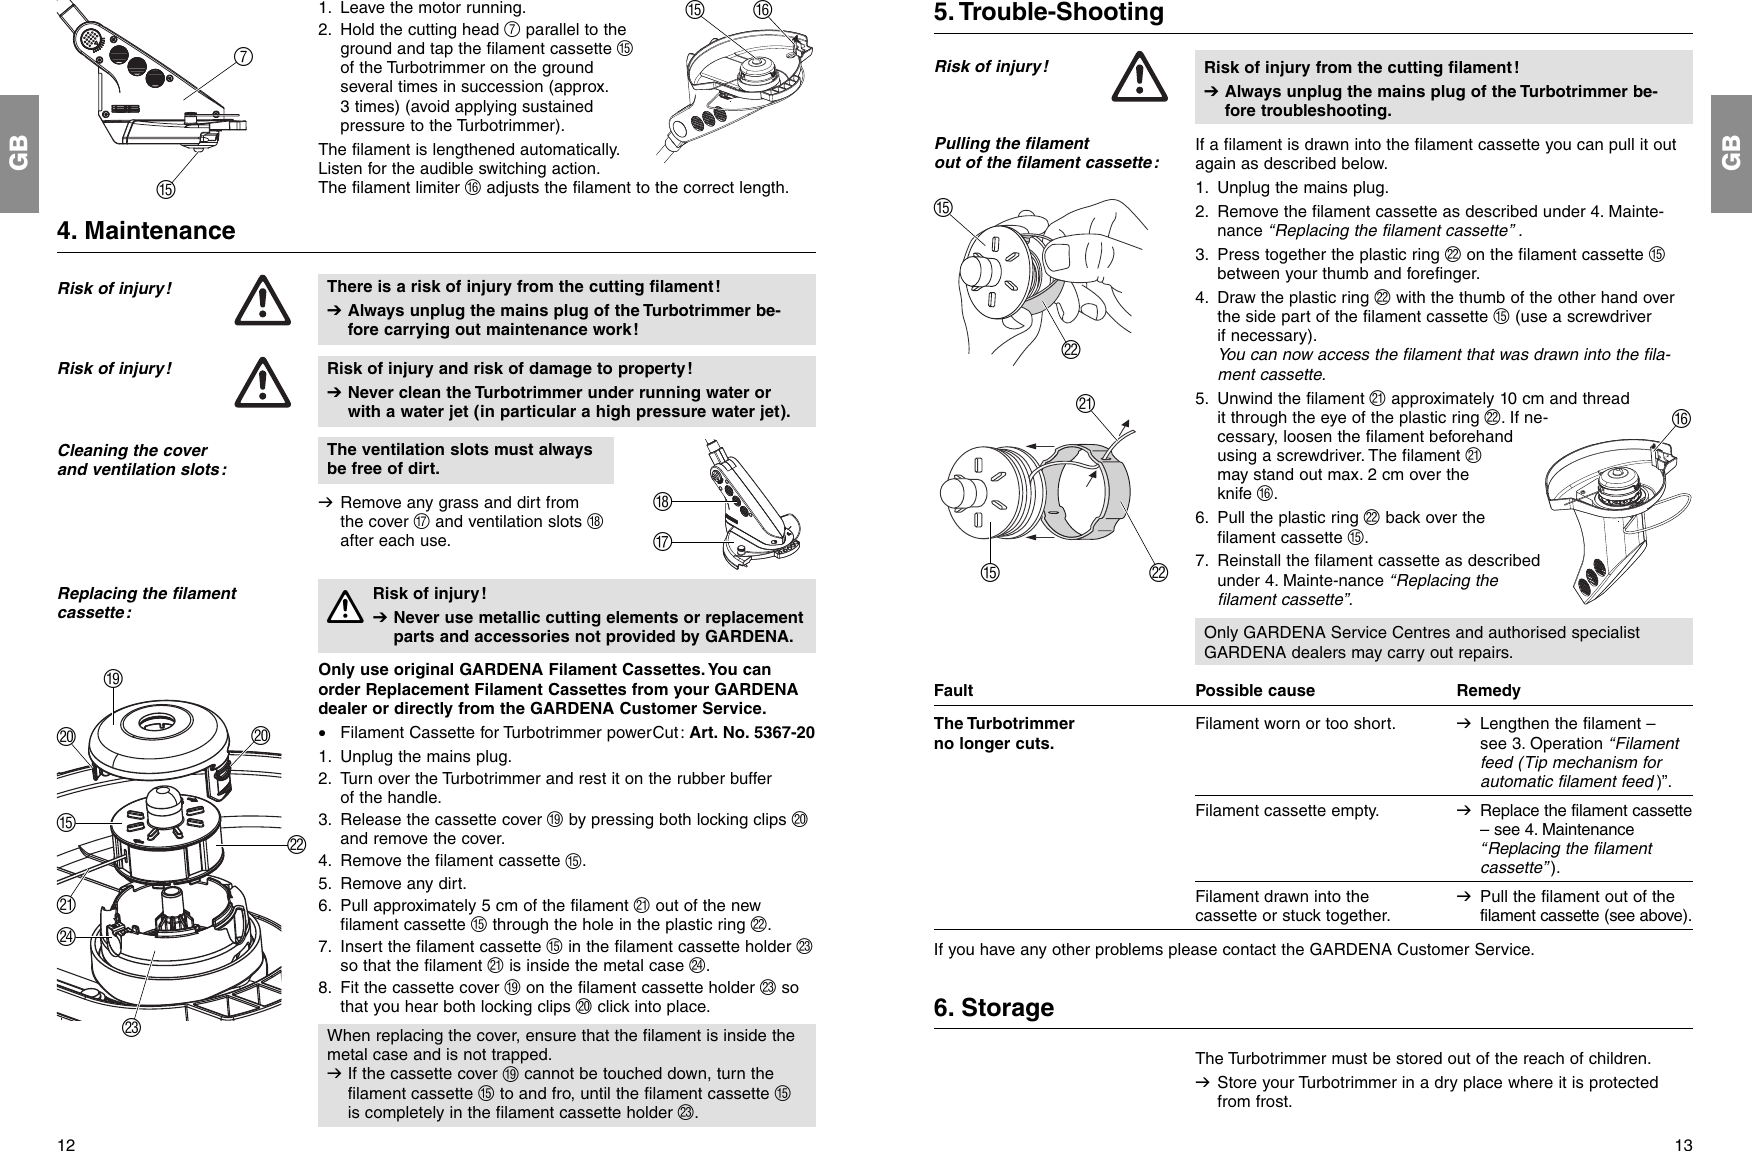 Page 4 of 8 - Gardena Gardena-Lawn-Mower-Users-Manual- 2404-20.960.04_01.12.2003  Gardena-lawn-mower-users-manual